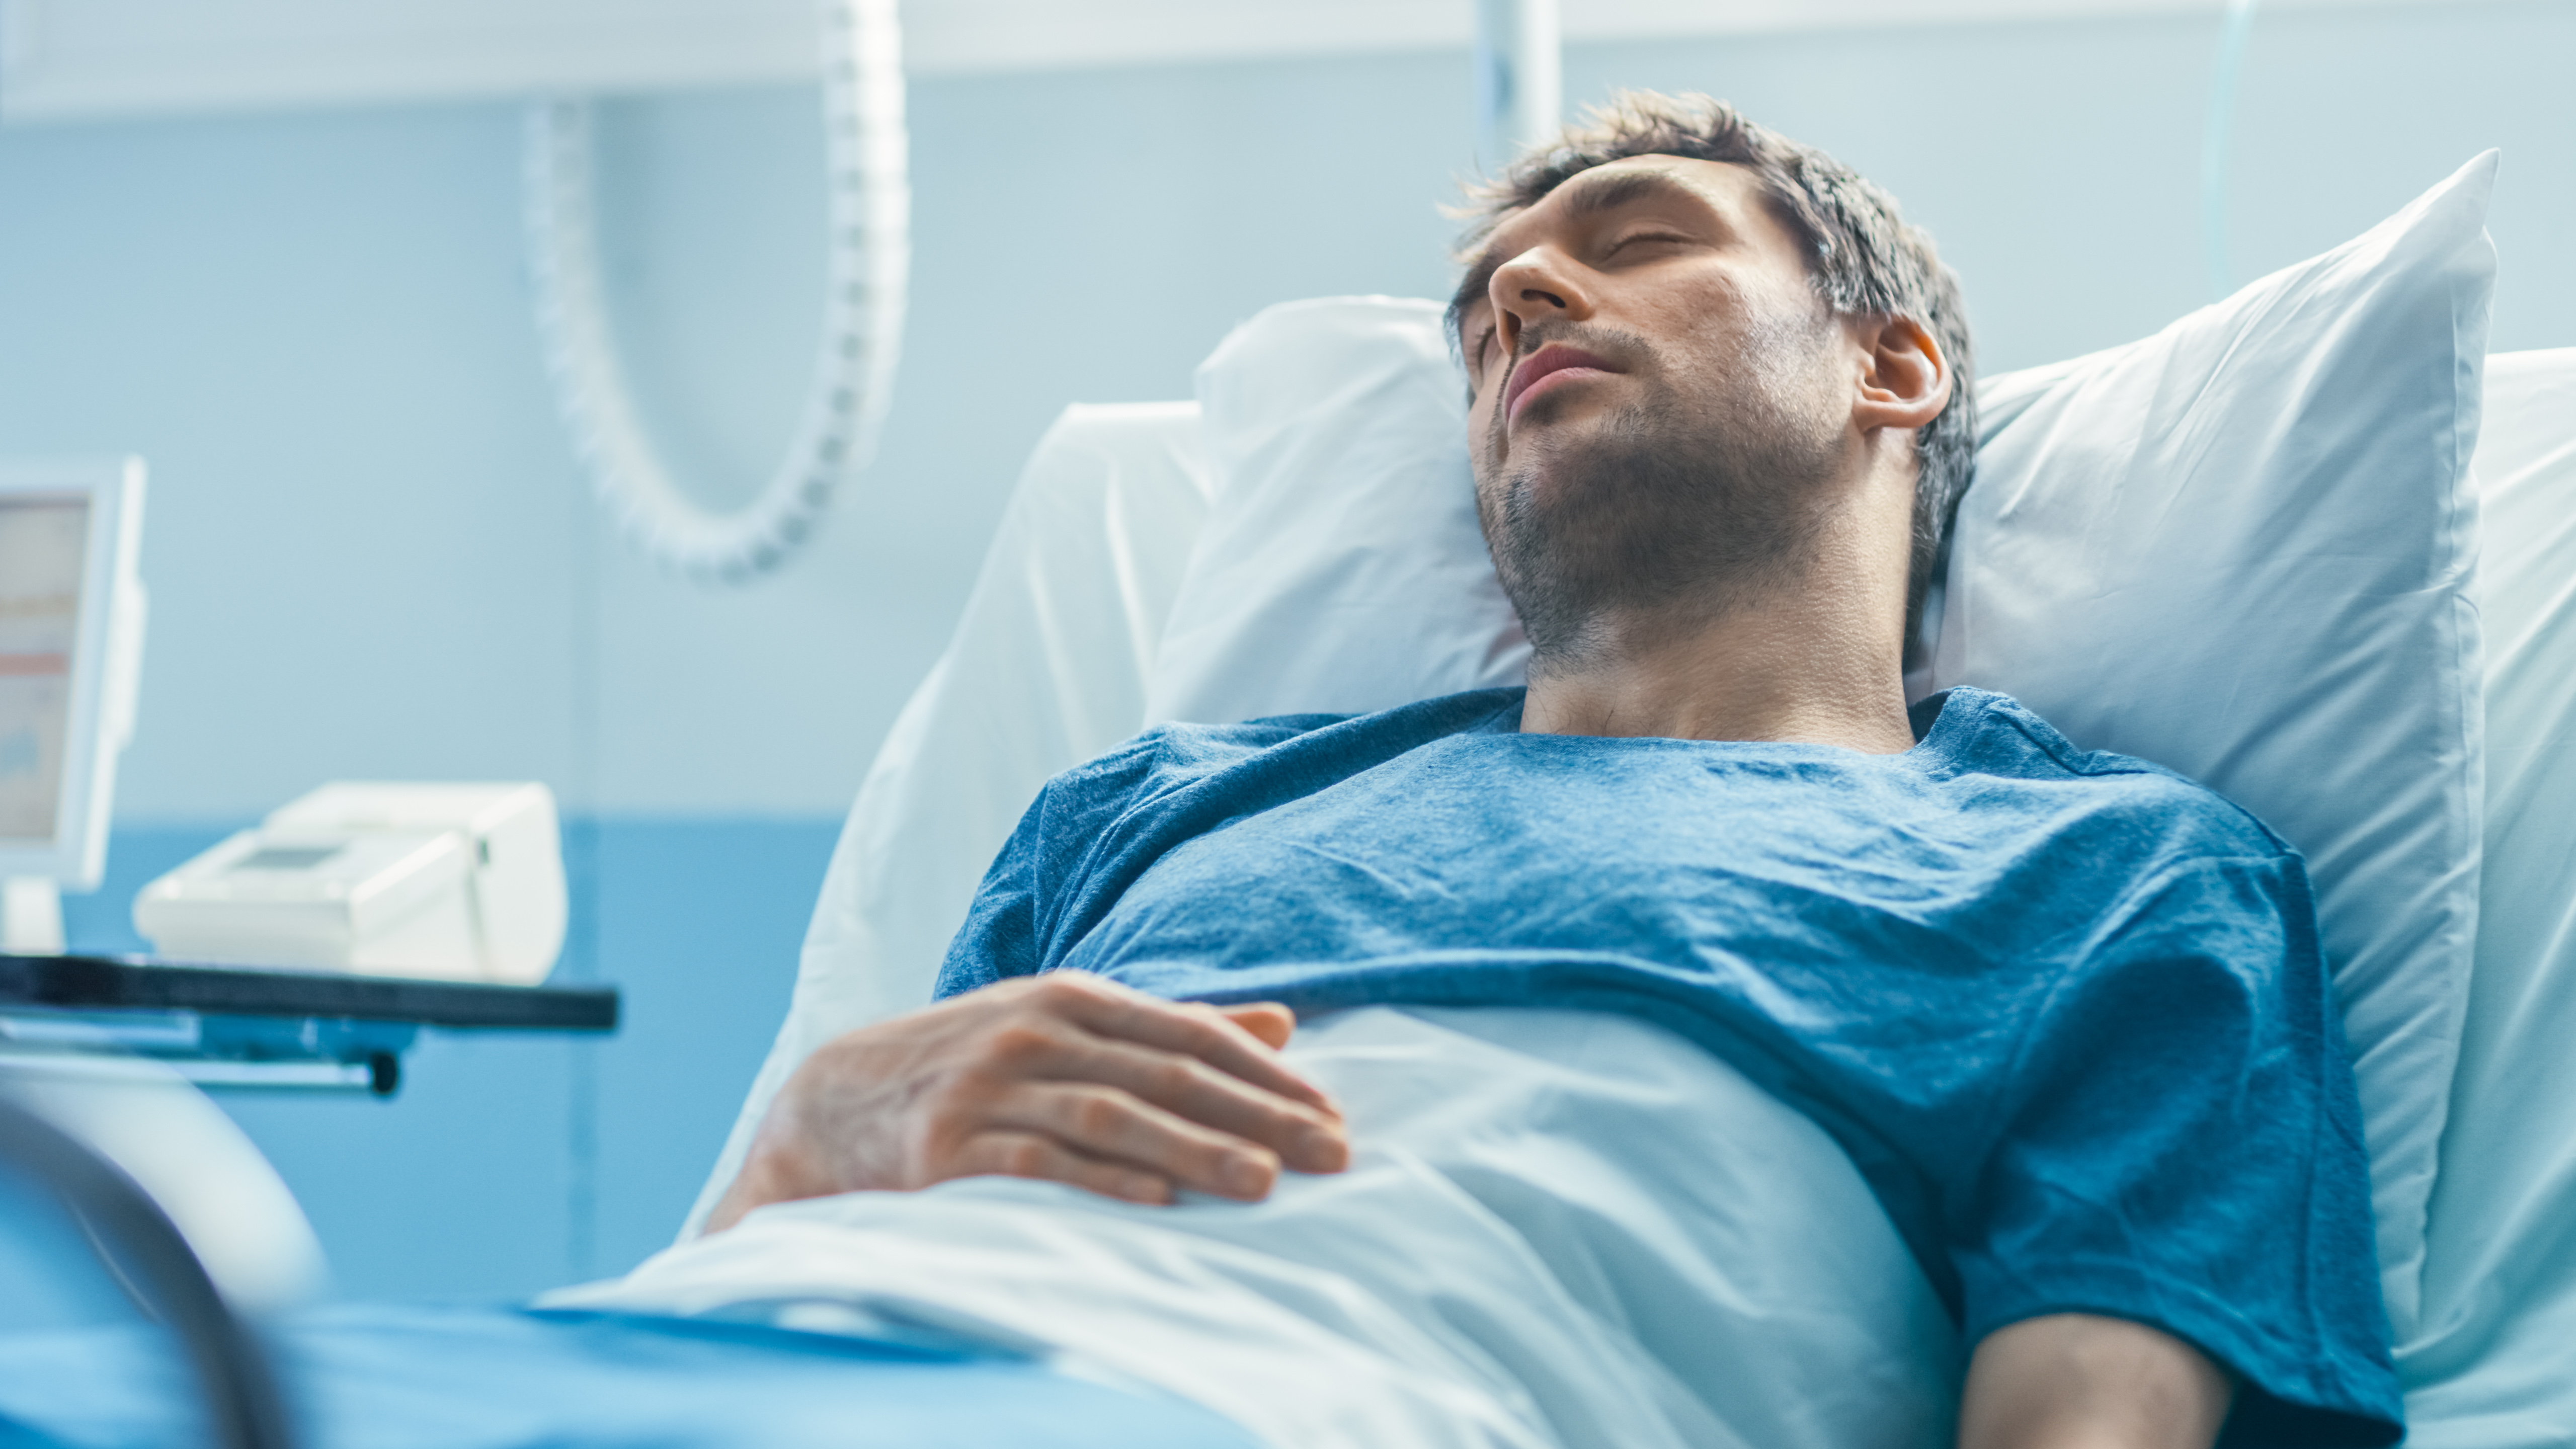 Man is sleeping in hospital bed | Source: Shutterstock.com